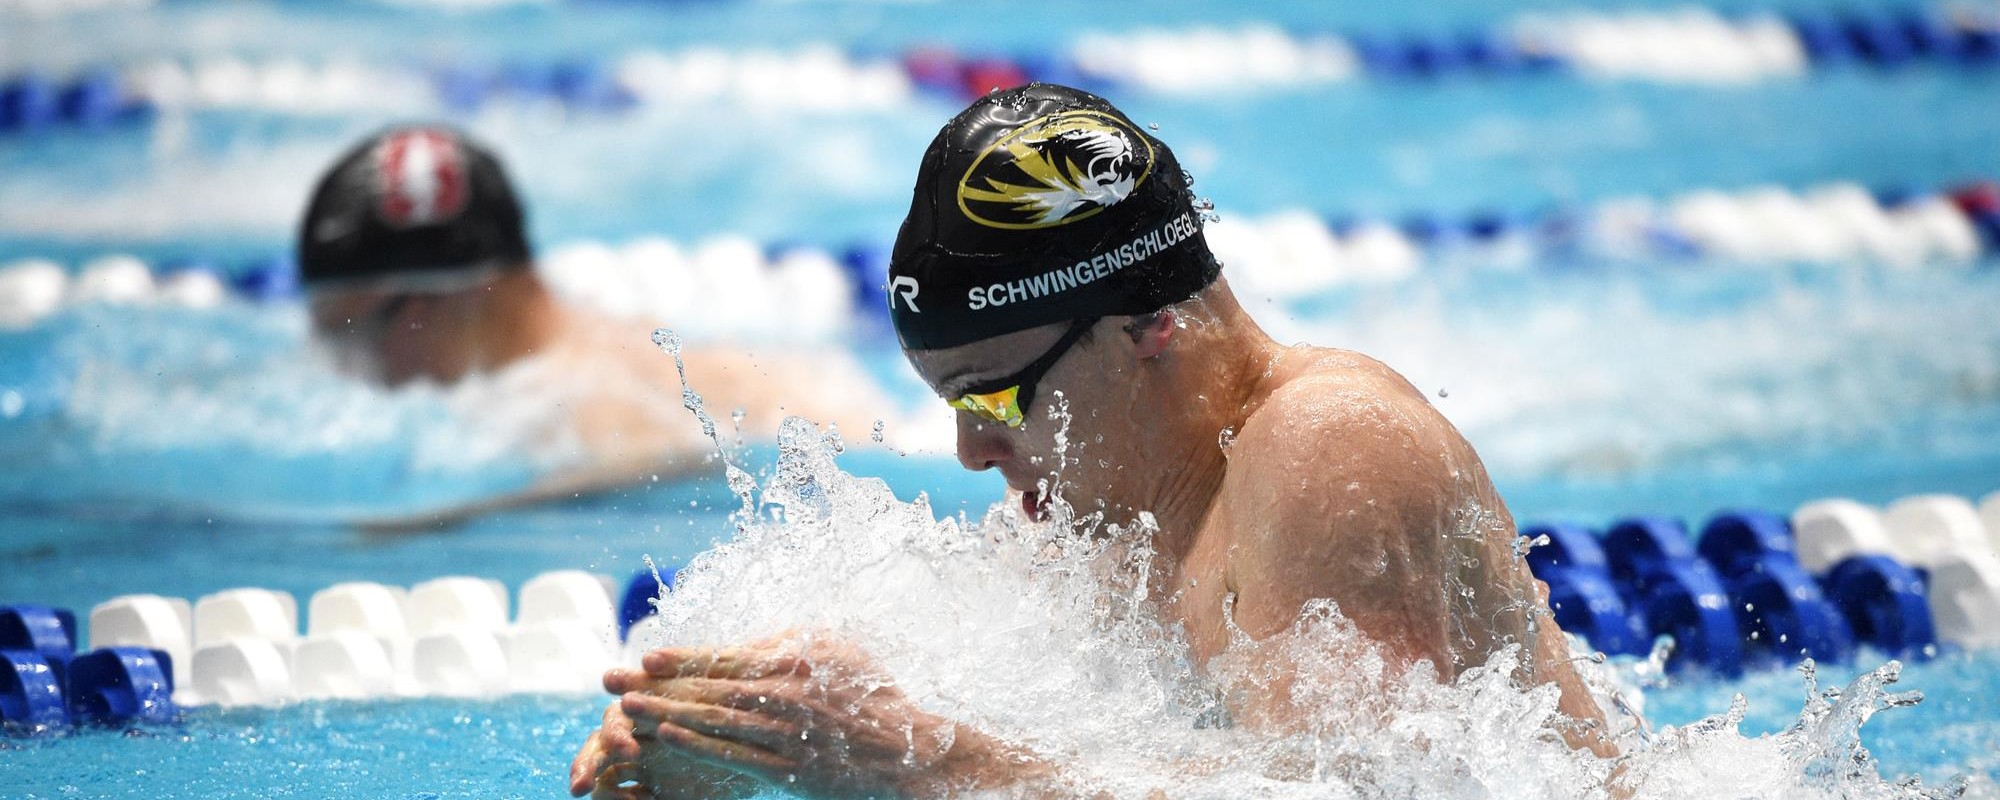 Fabian Schwingenschlögl swims for mizzou